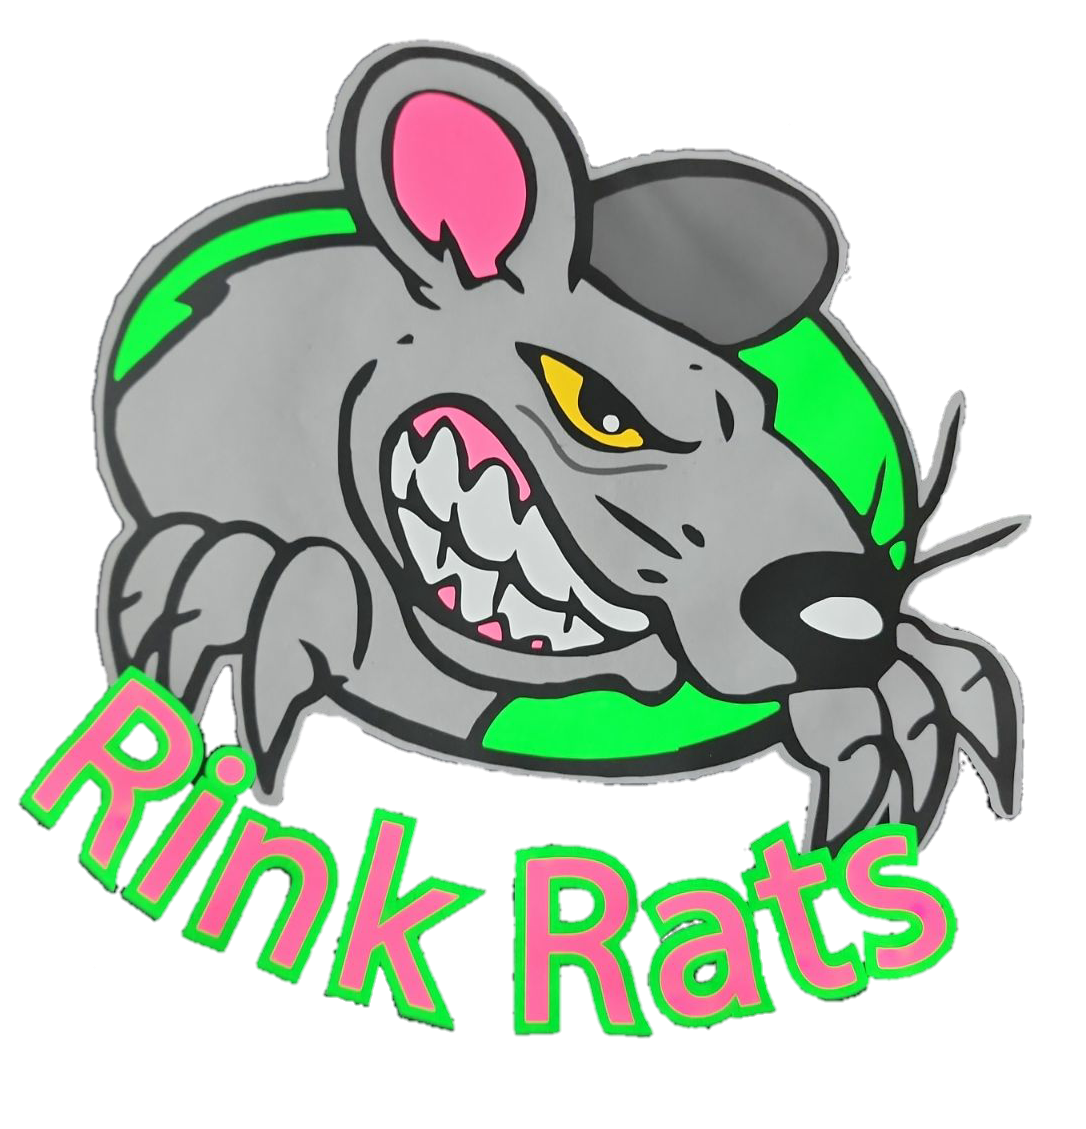 Rink Rats